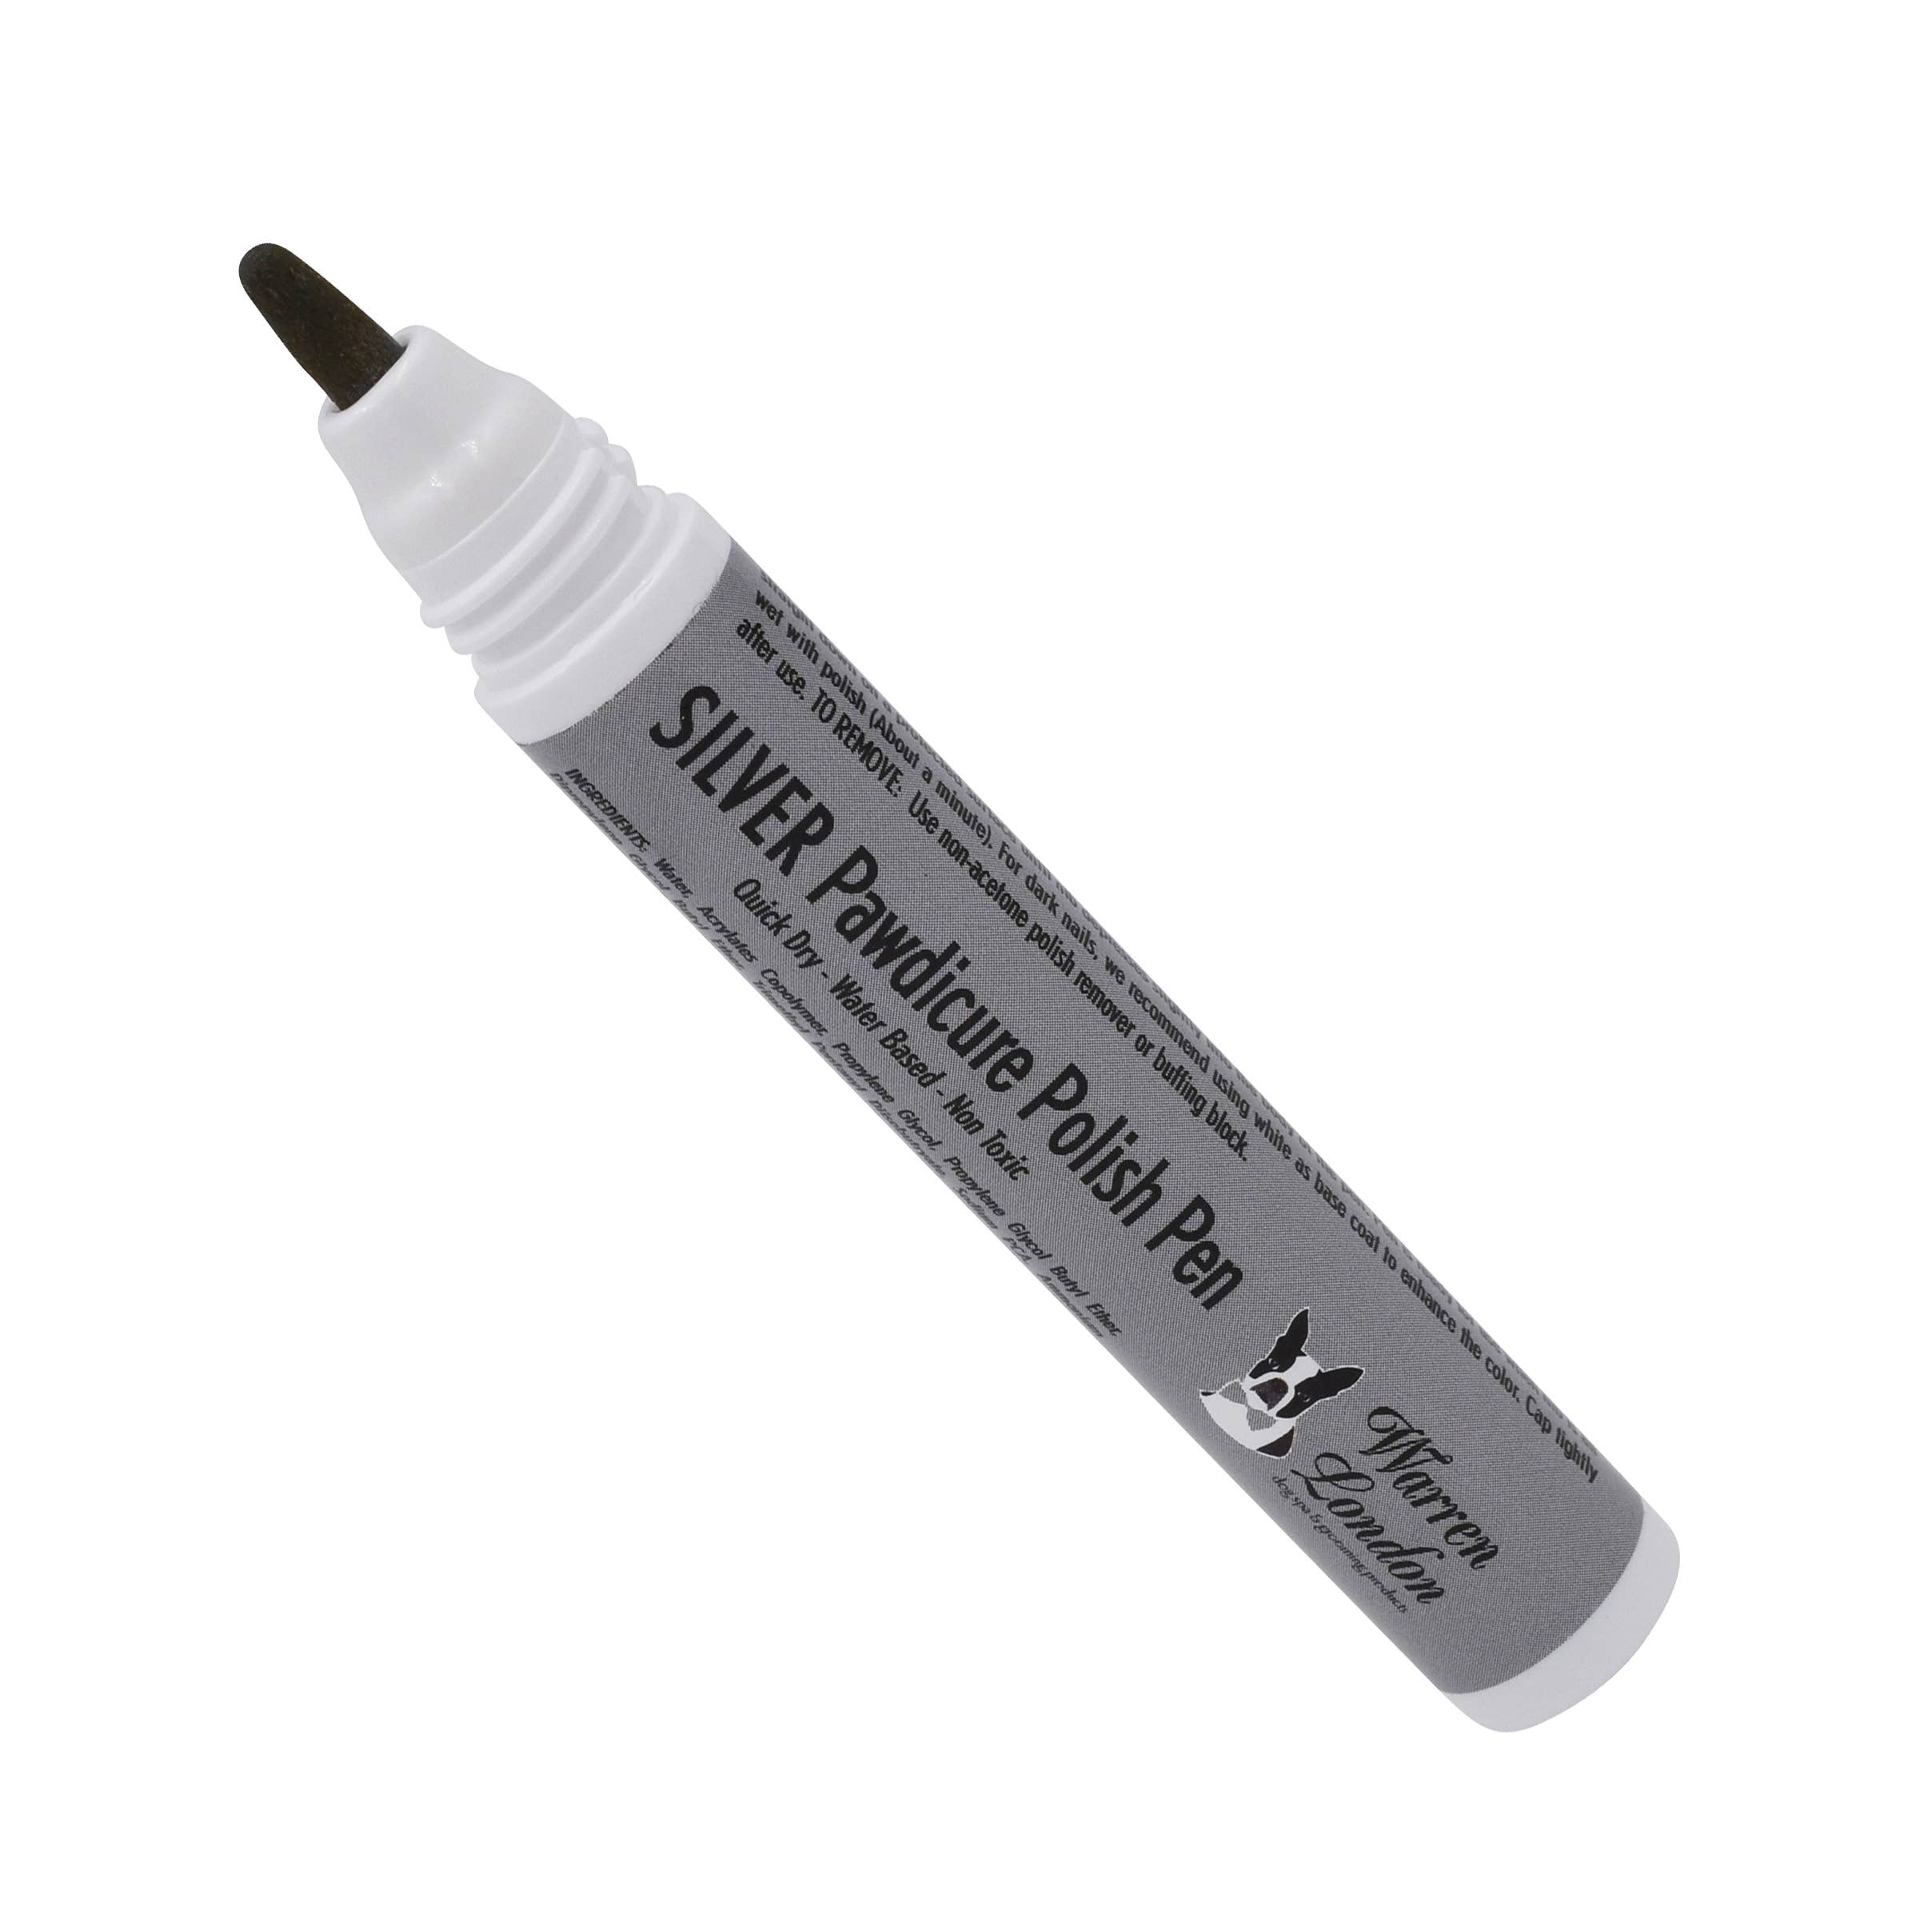 Warren London Dog Products - Pawdicure Nail Polish Pen - Quick Dry - 13 Colors